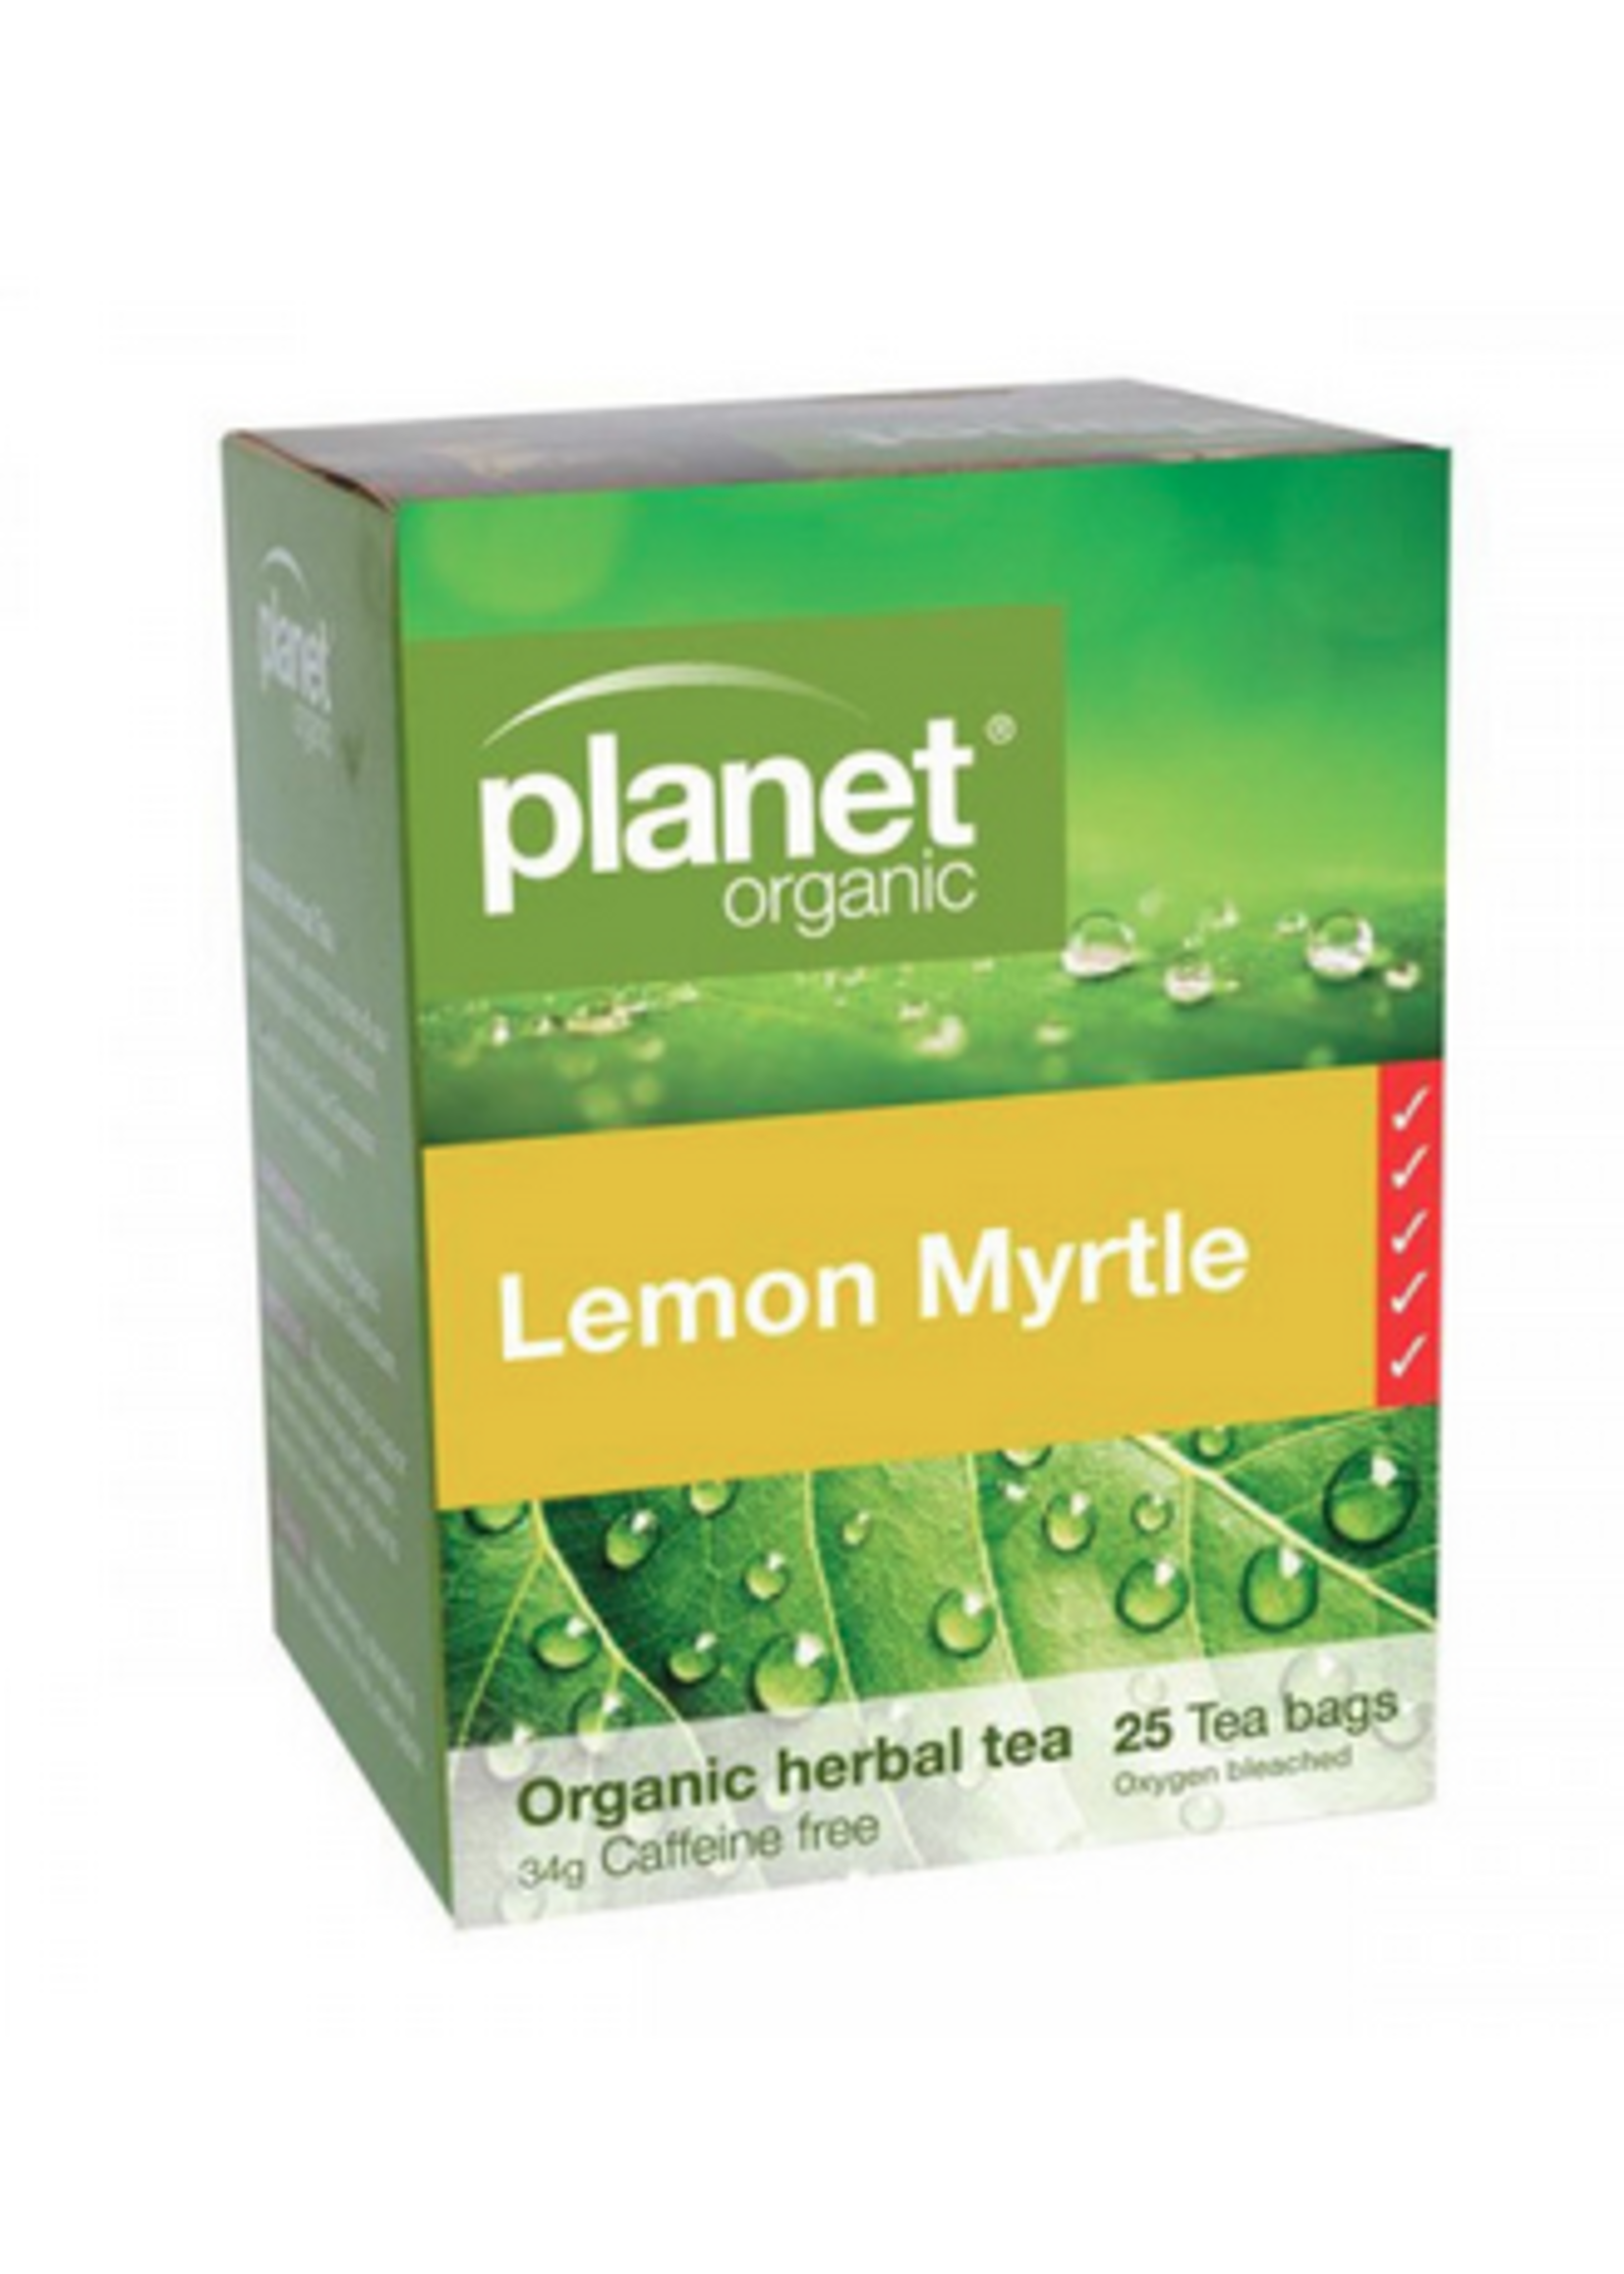 Planet Organic Planet Organic Lemon Myrtle tea 34g 25 tea bags